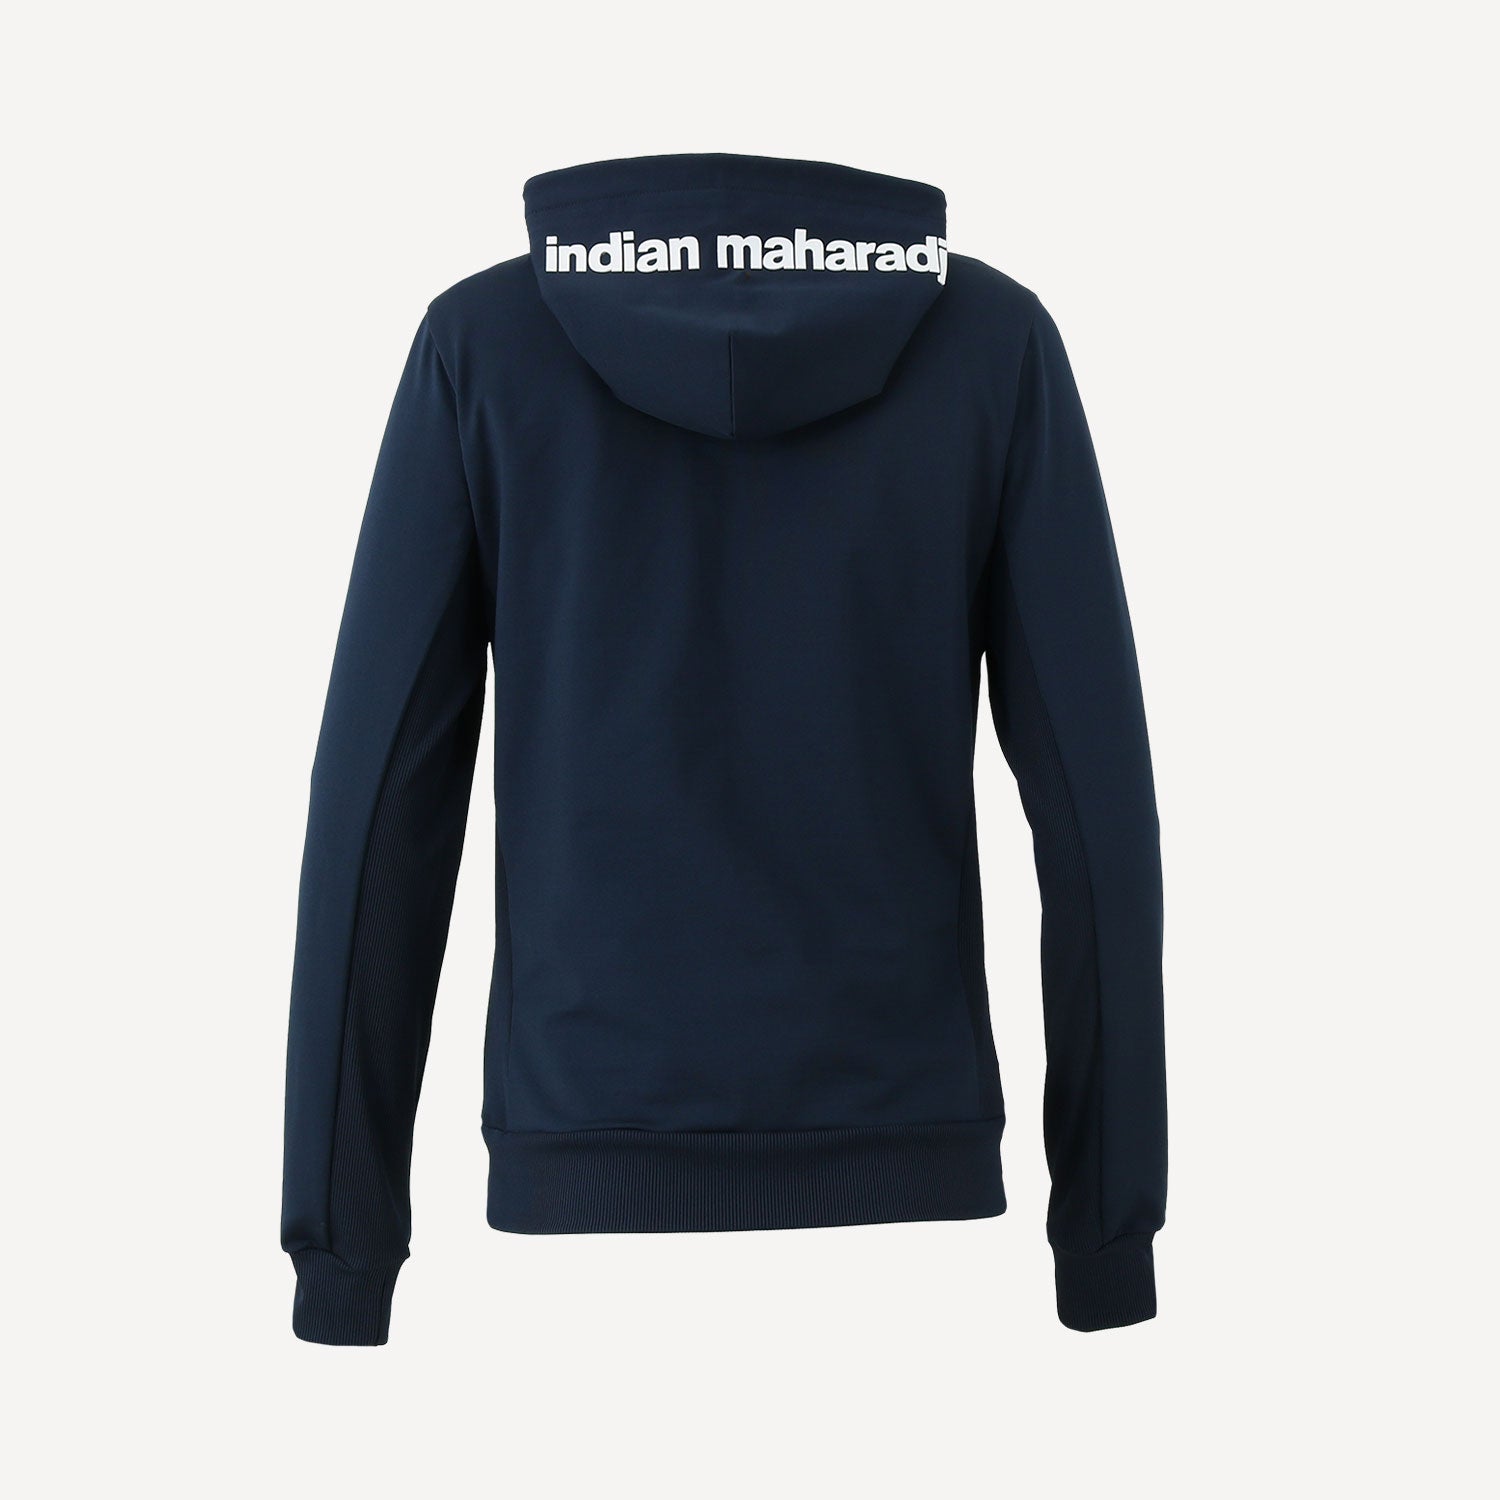 The Indian Maharadja Kadiri Women's Hooded Tennis Jacket - Dark Blue (2)